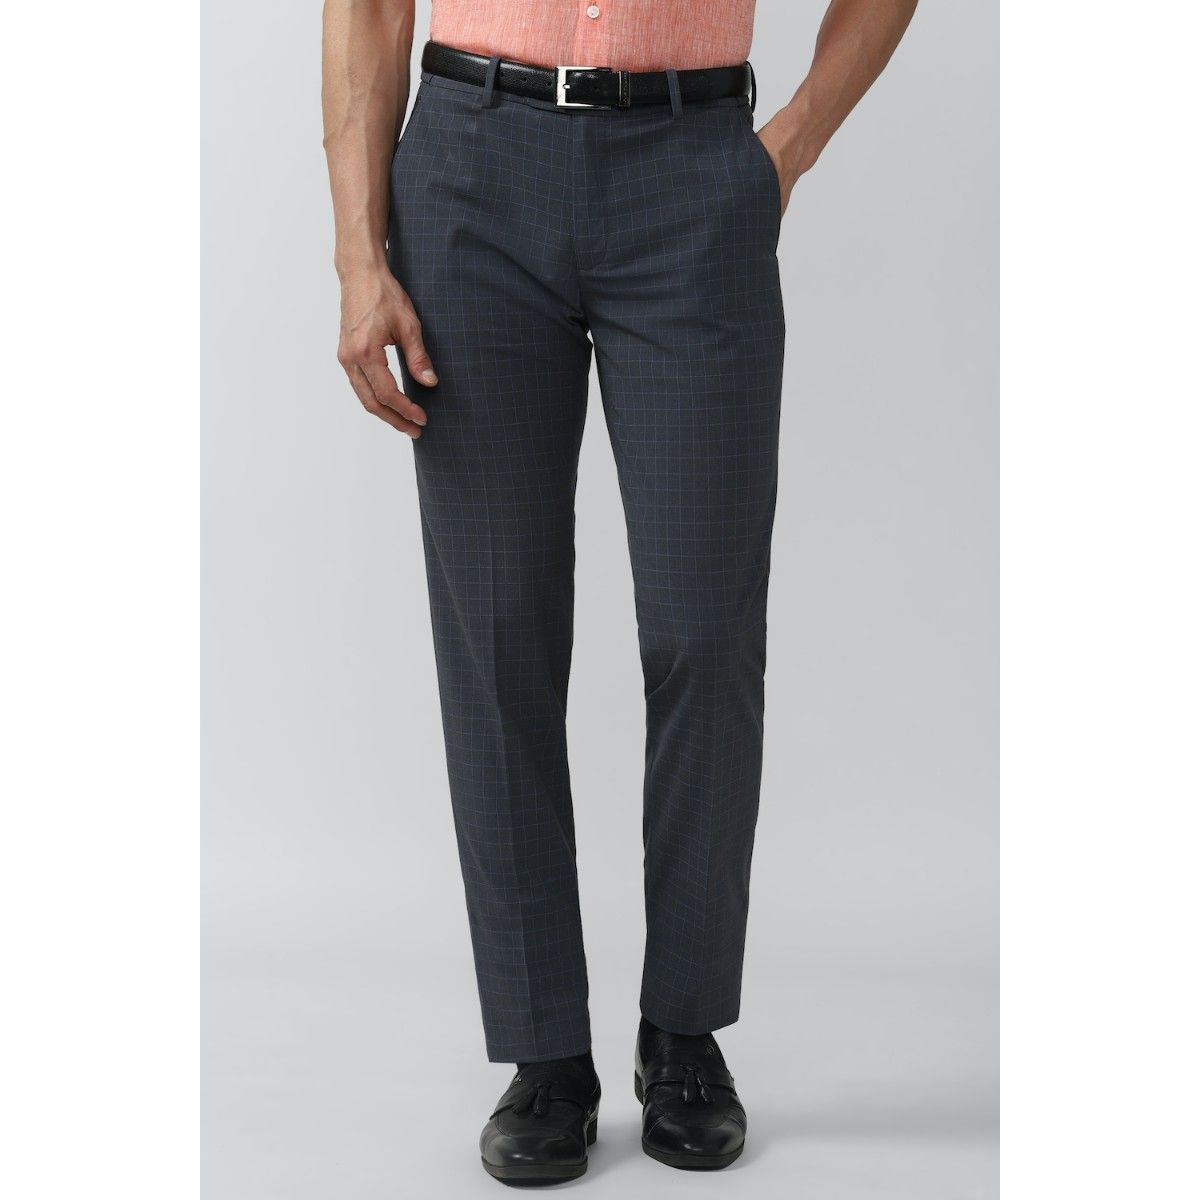 Buy JadeBlue Men's Solid Black Cotton Uno Fit Casual Trouser online